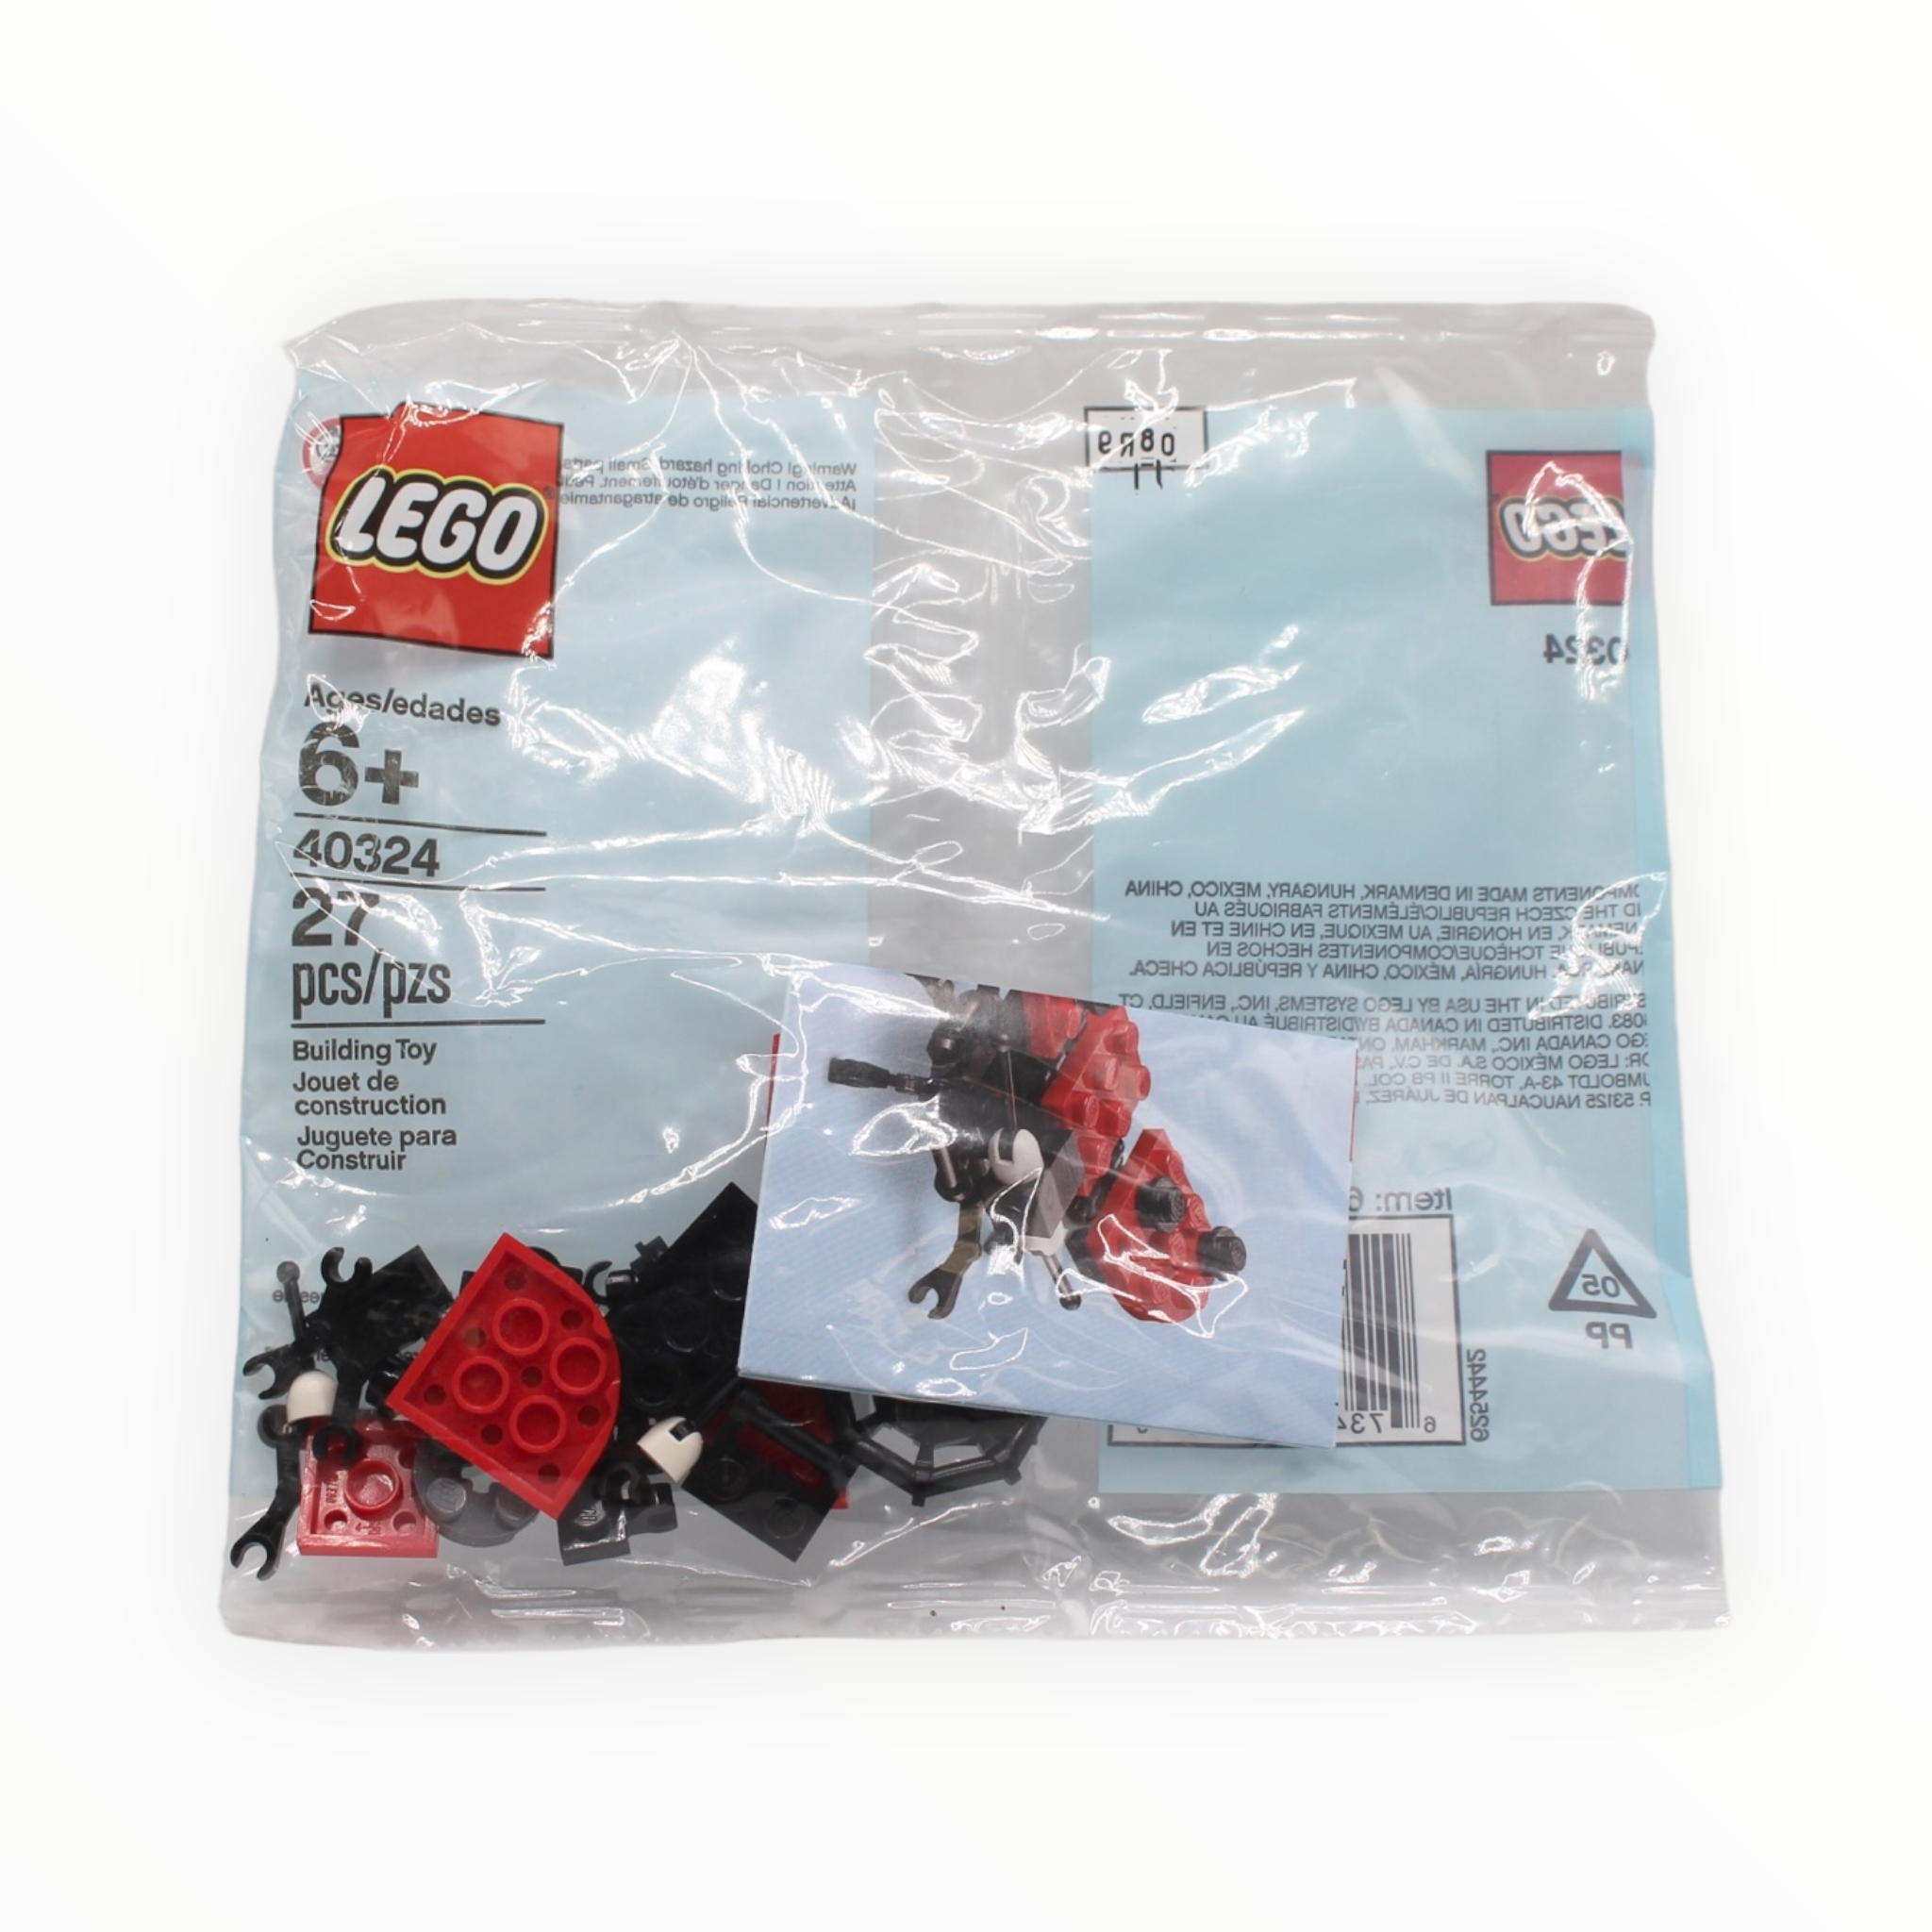 Polybag 40324 LEGO Monthly Mini Model Build Set - April 4th, 2019 Ladybird